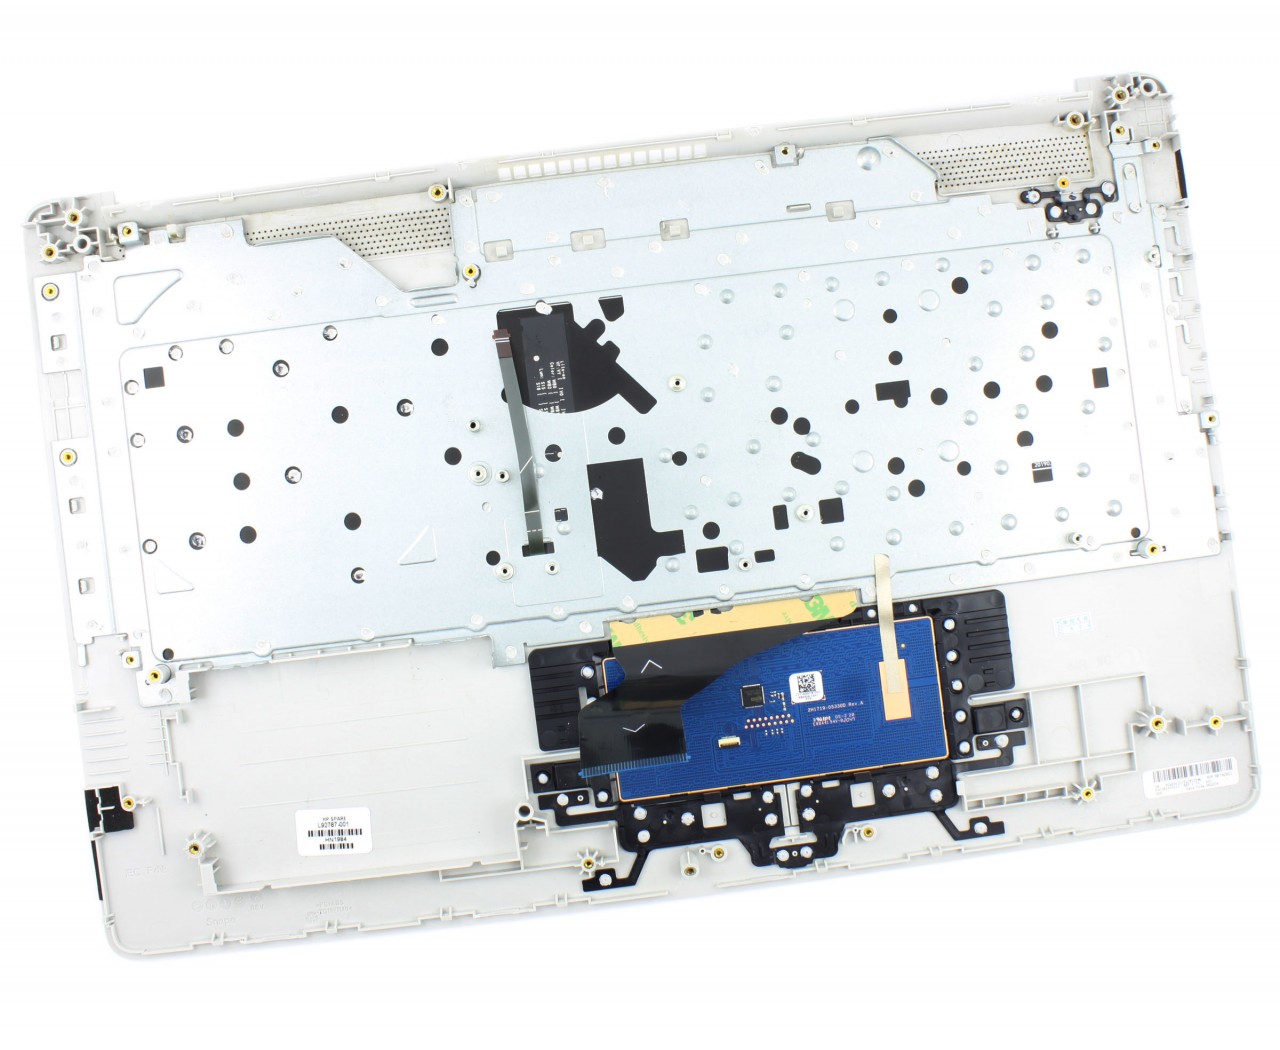 Tastatura HP L22750-001 Argintie cu Palmrest Argintiu si TouchPad iluminata backlit argintie